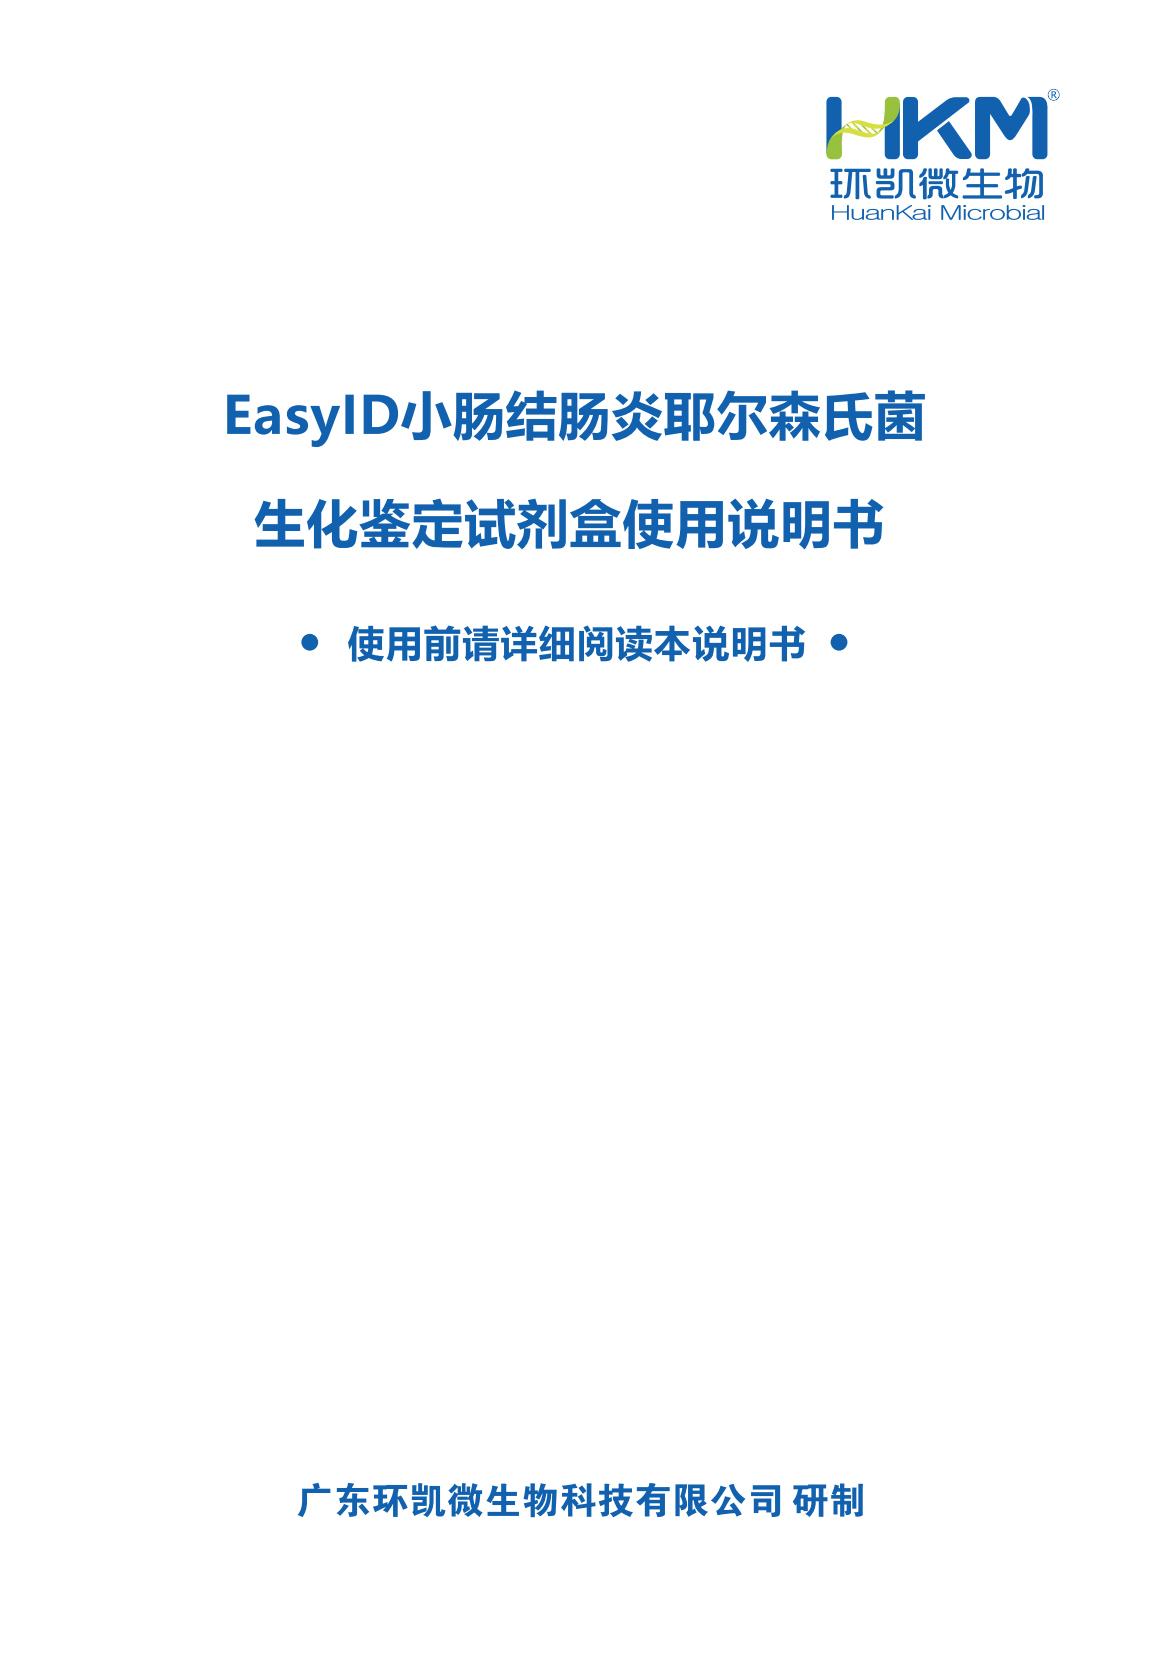 EasylD小肠结肠炎耶尔森氏菌生化鉴定试剂盒 产品使用说明书